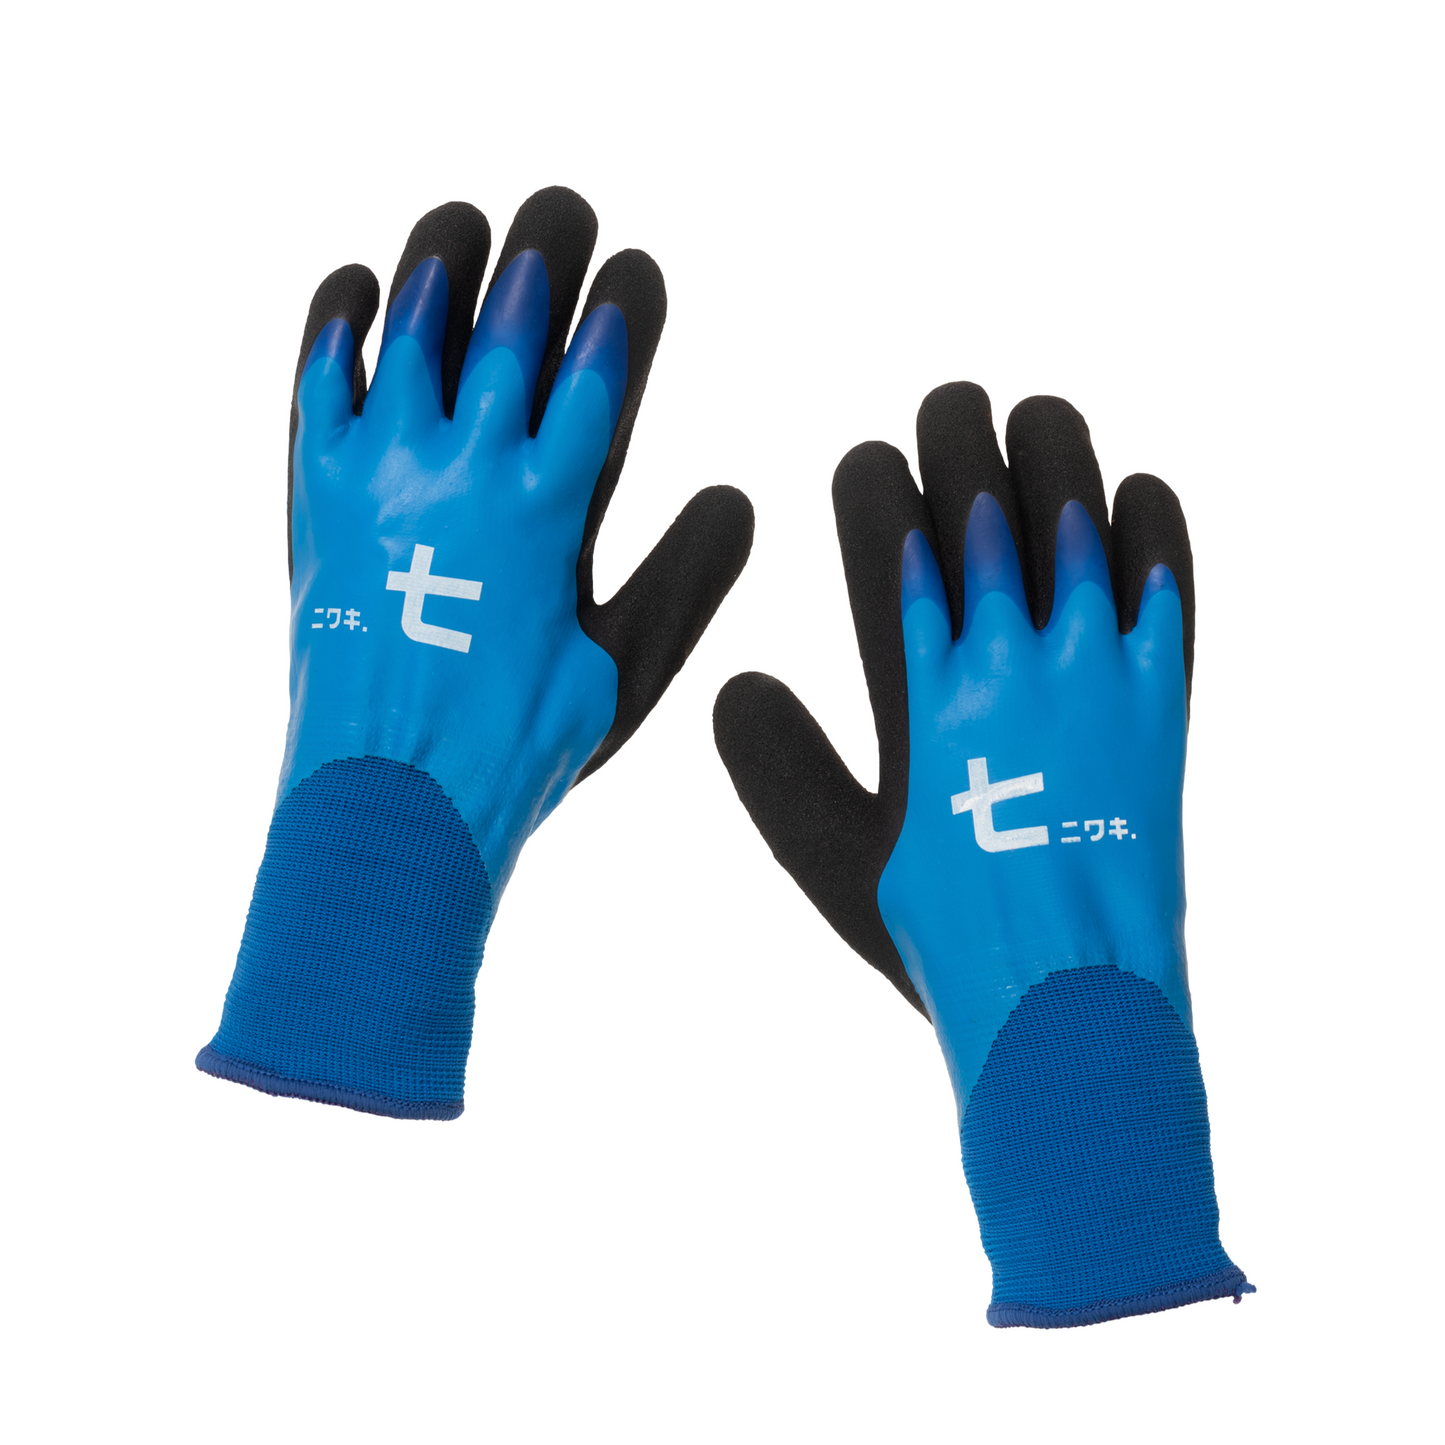 Niwaki Nitrile Grip Winter Gardening Gloves